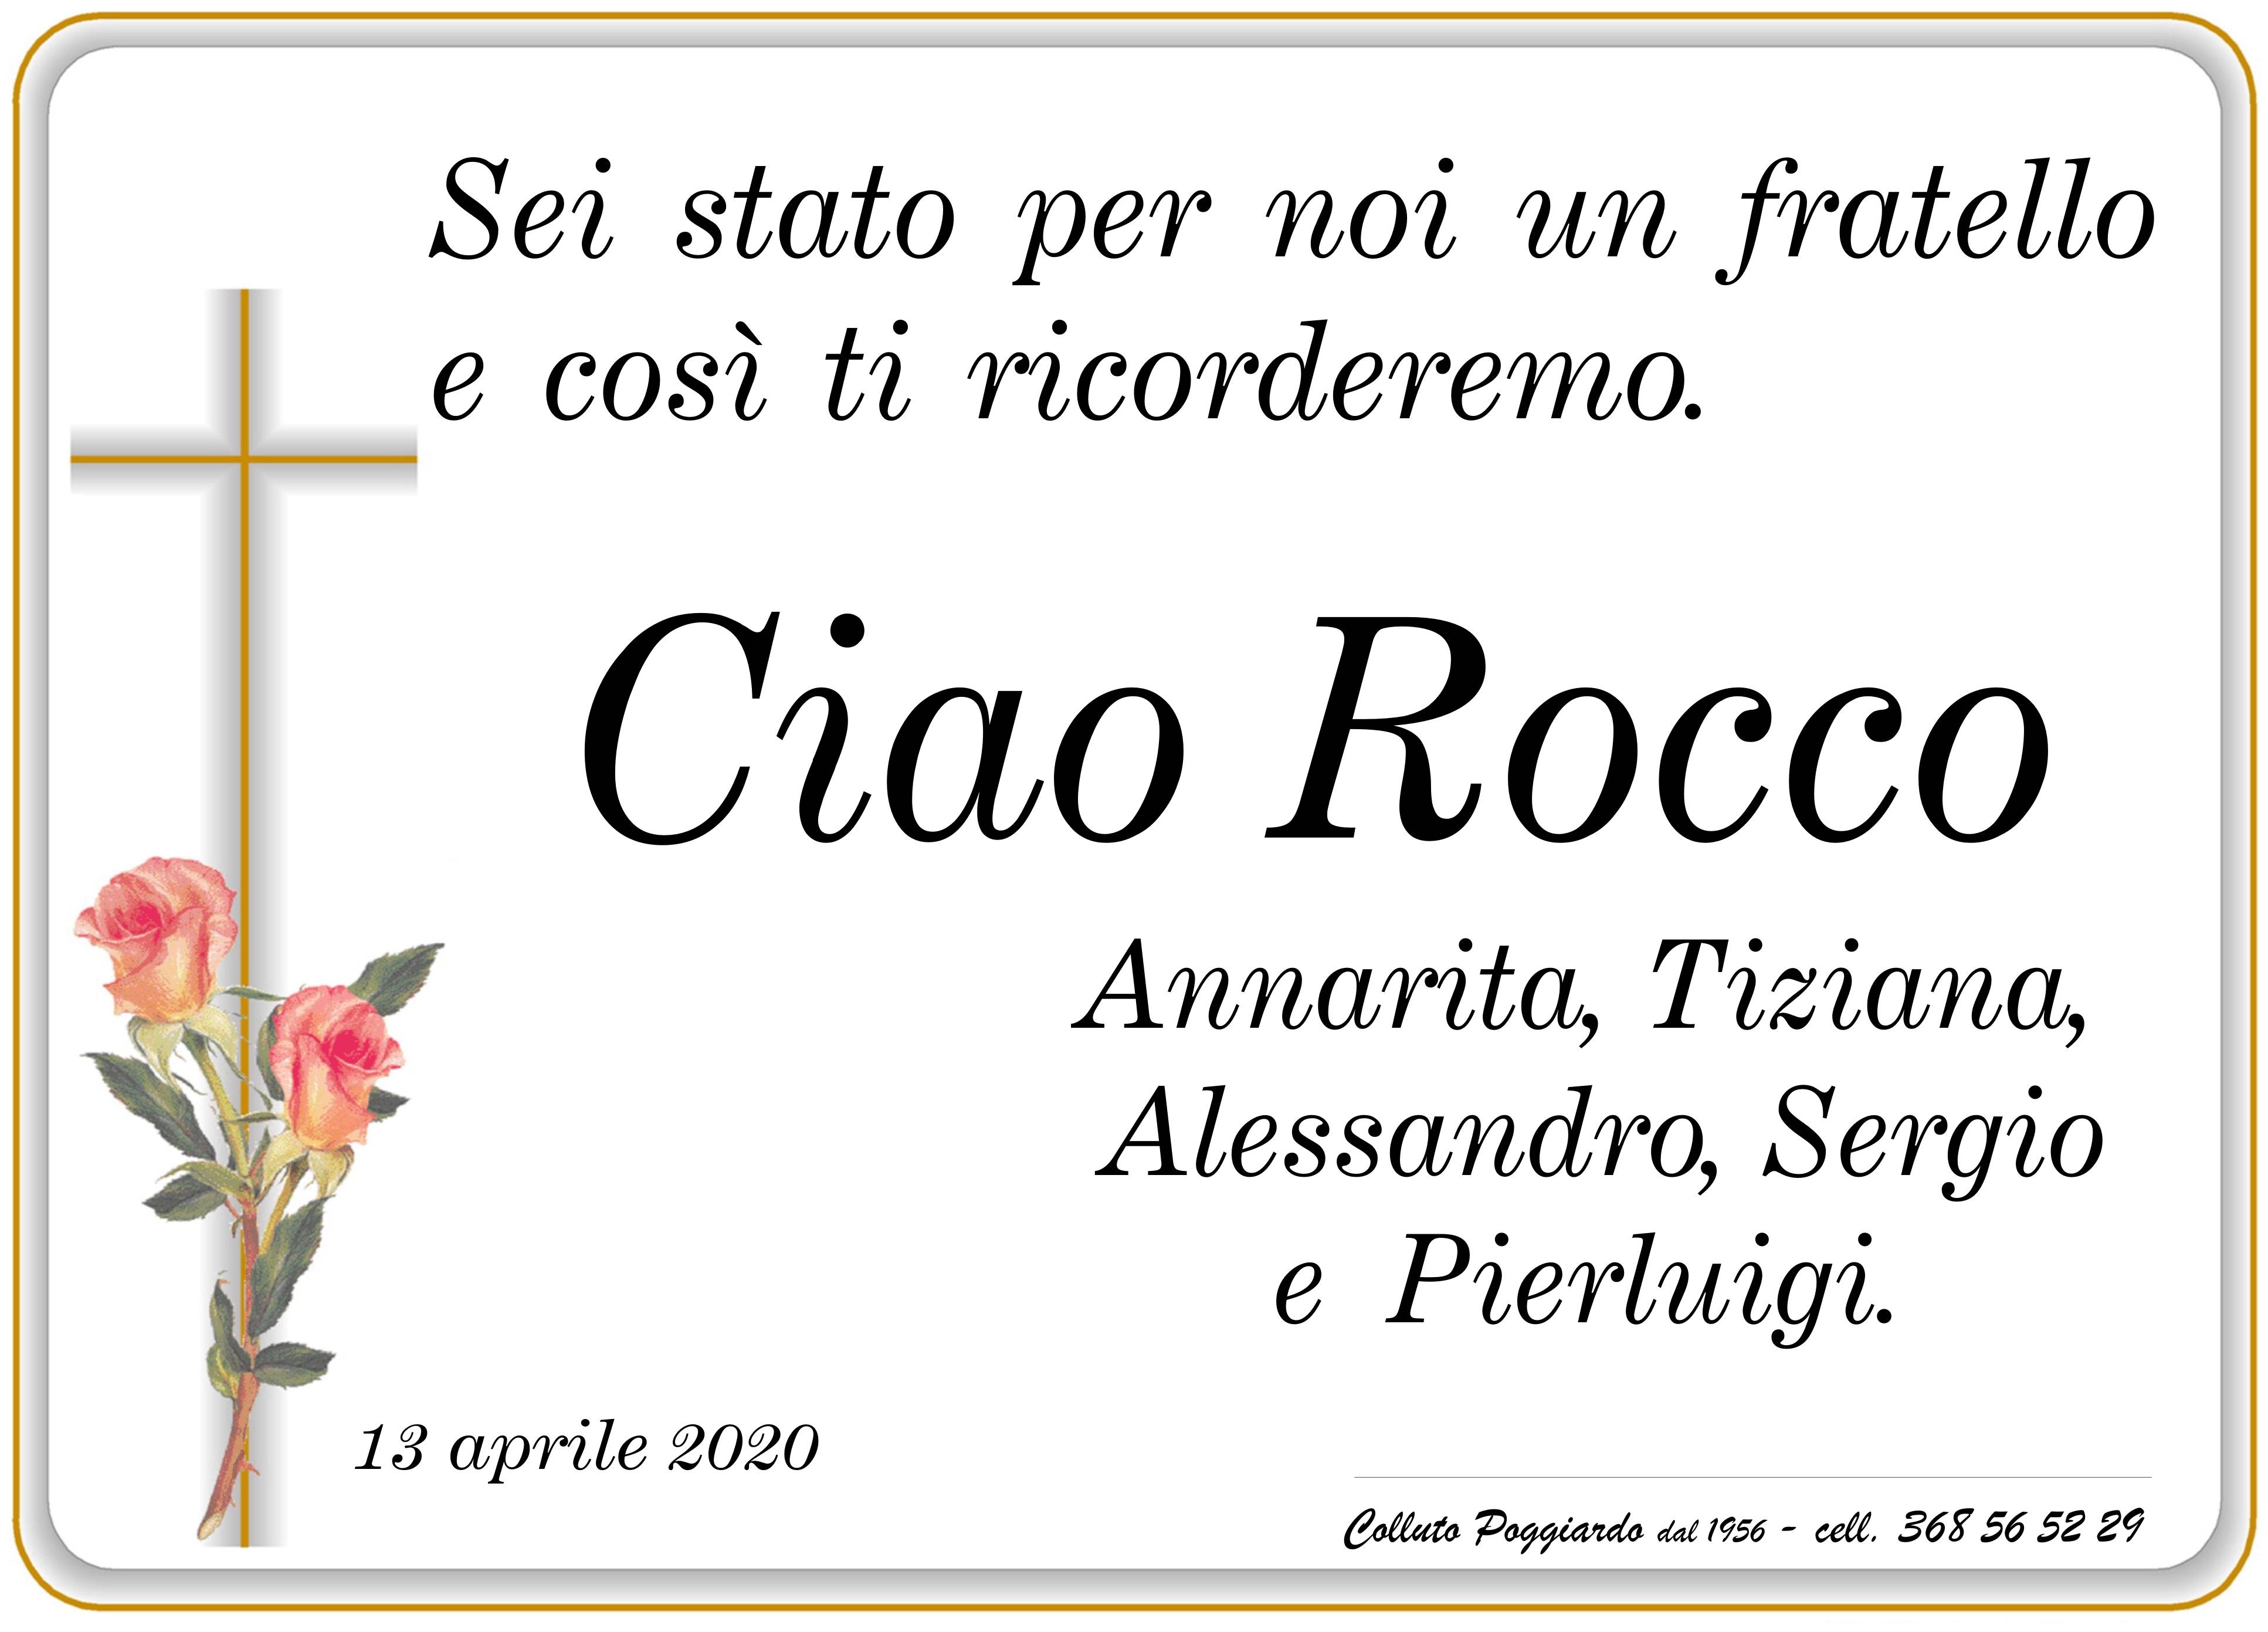 Ciao Rocco